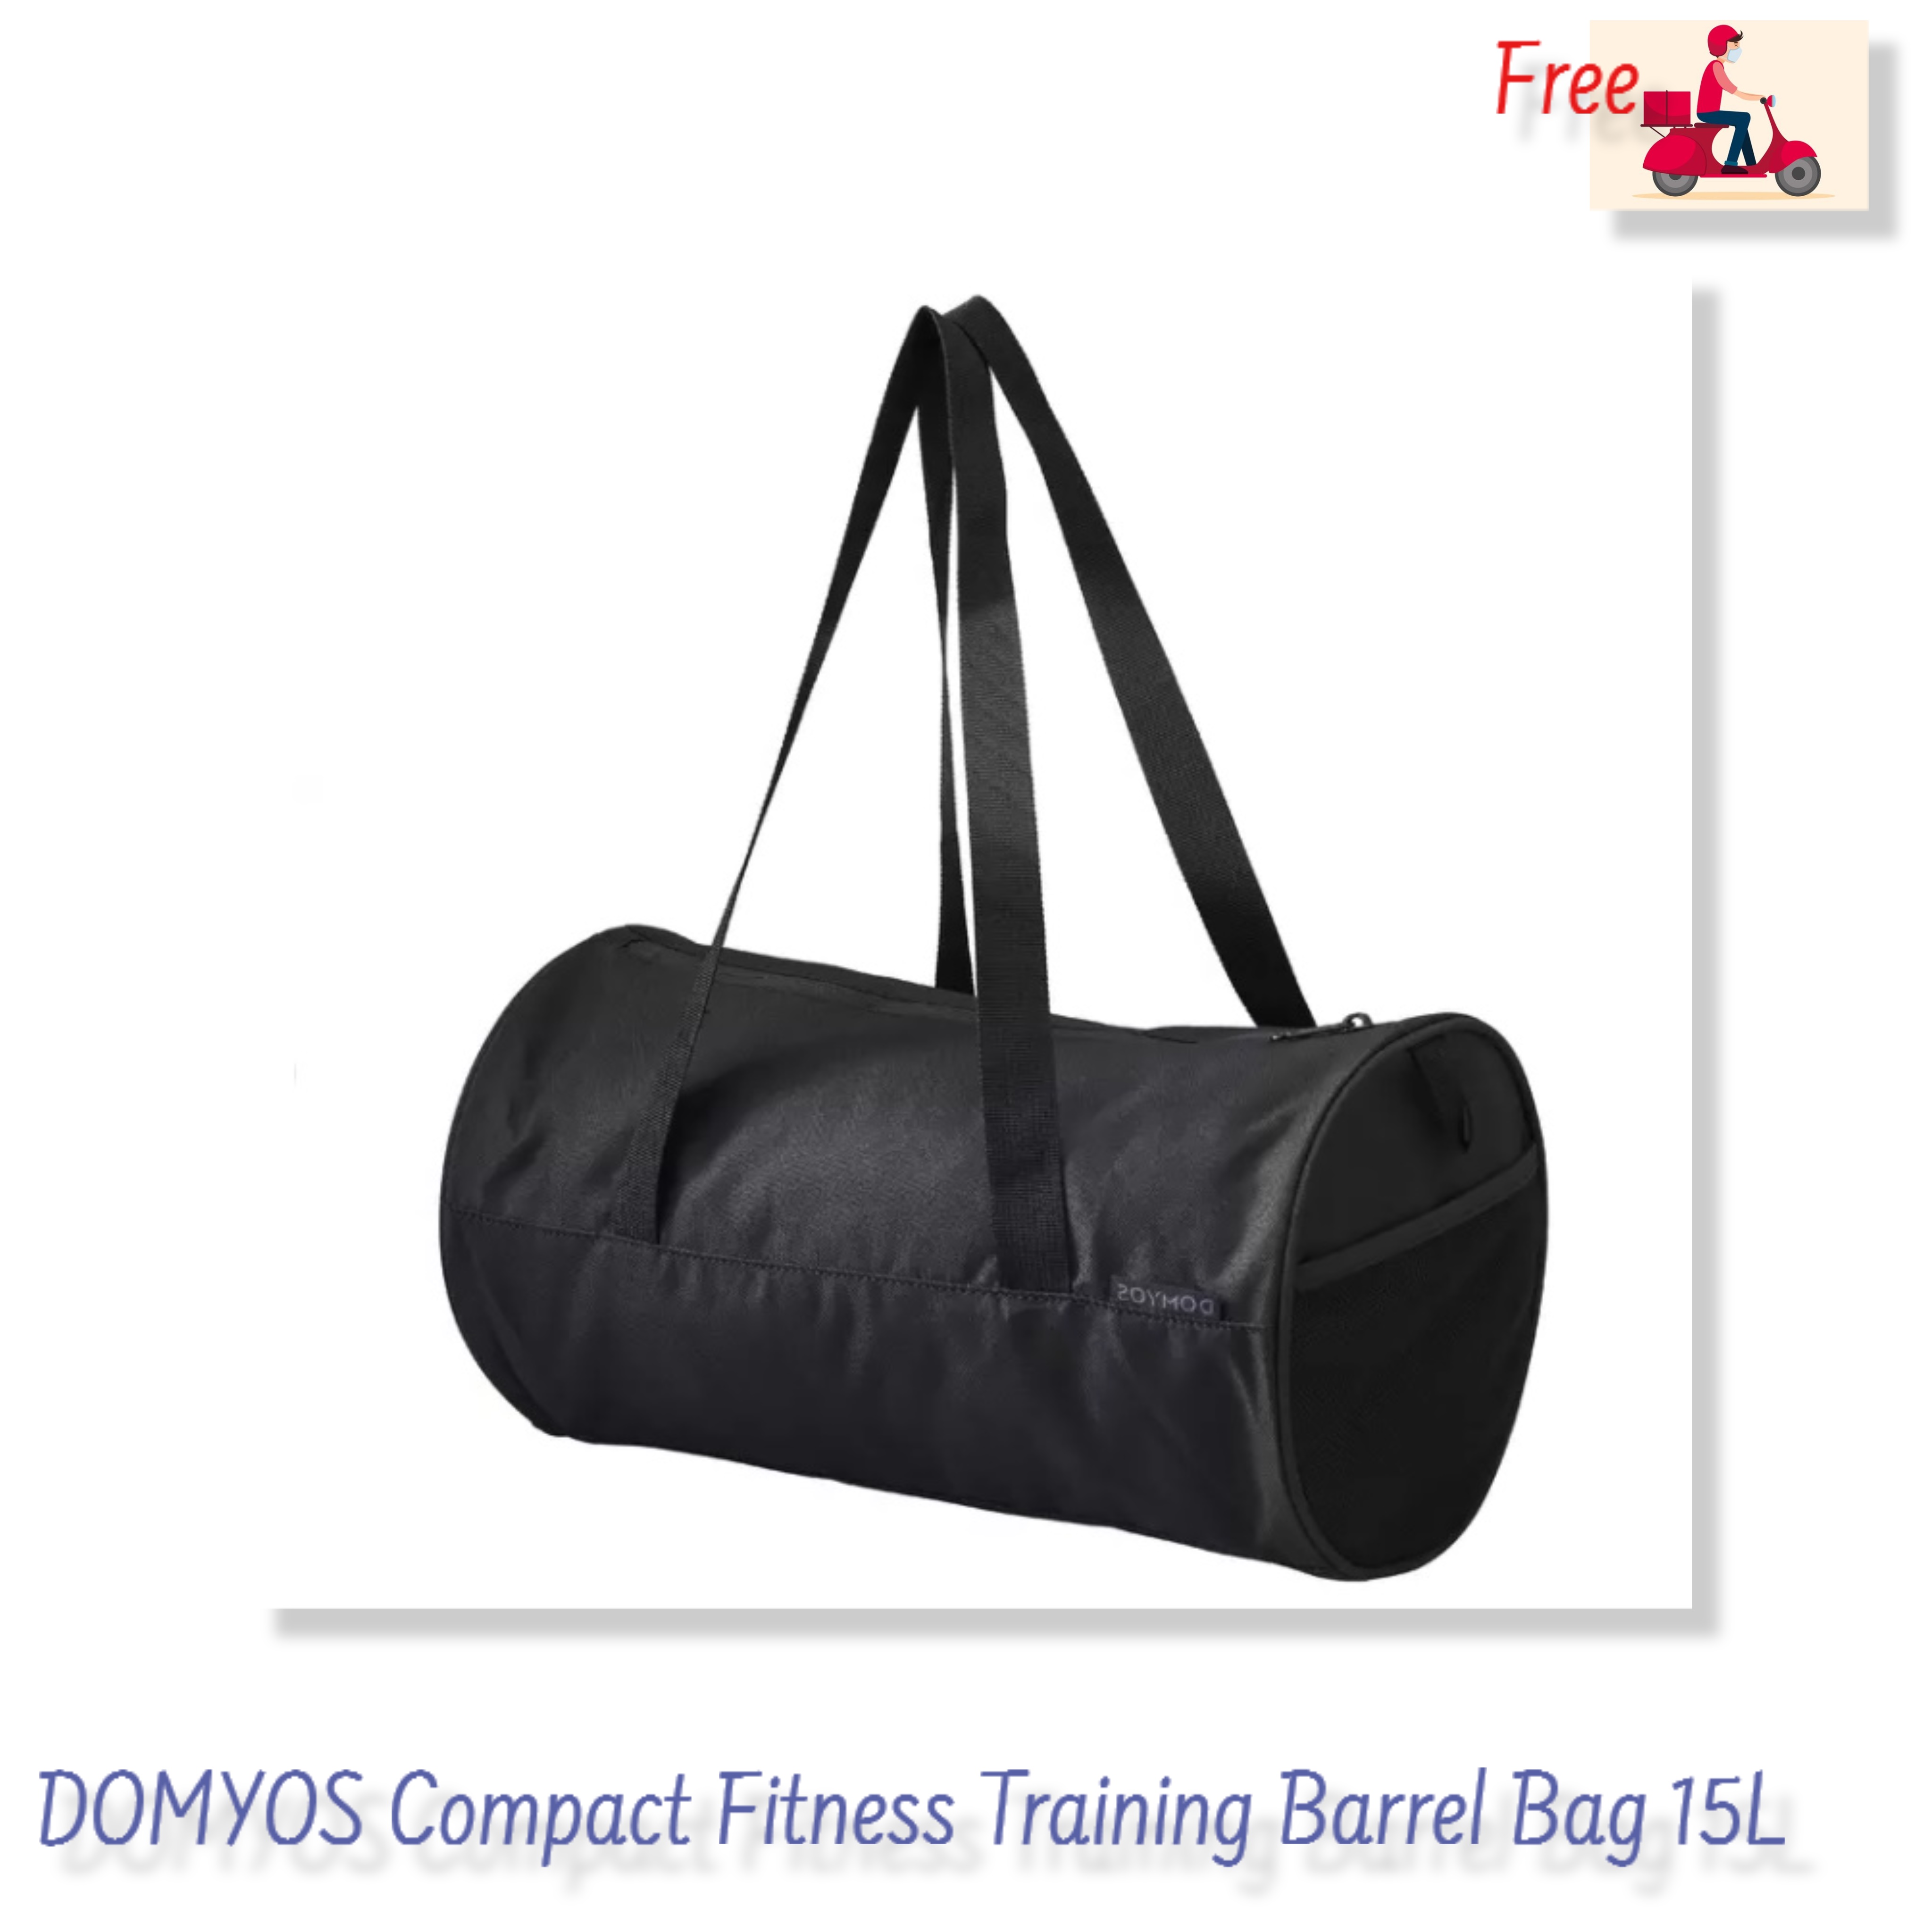 Compact Fitness Training Barrel Bag 15L กระเป๋า สำหรับใส่อุปกรณ์ ออกกำลังกาย ความจุ 15 ลิตร